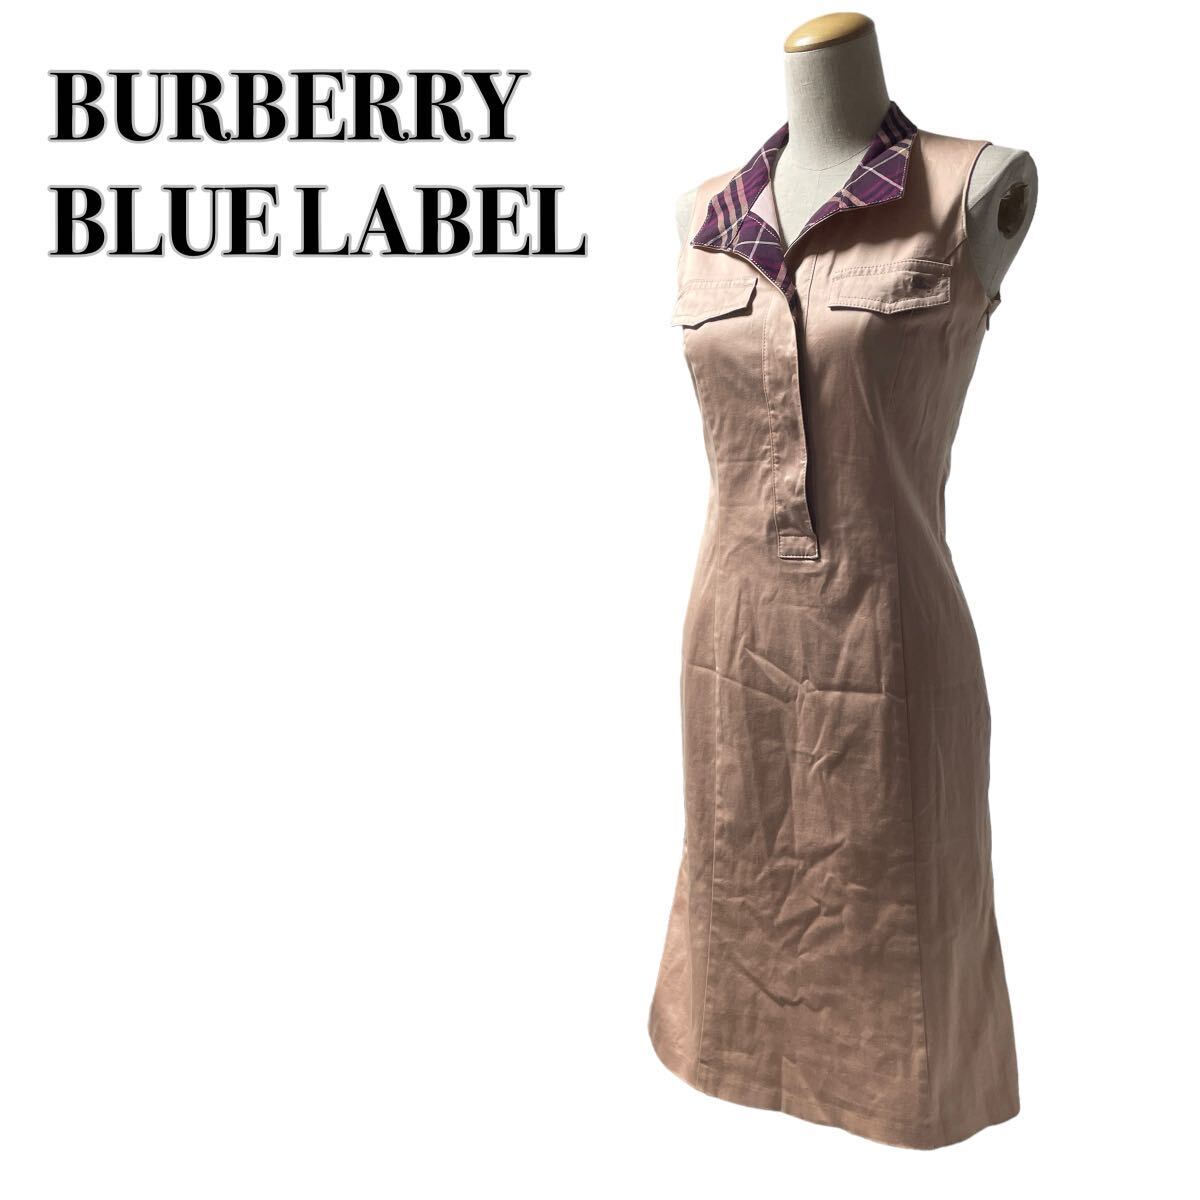 BURBERRY BLUE LABEL バーバリー ブルーレーベル ノースリーブ ワンピース ピンクベージュ 38 M ホースロゴ 三陽商会 ノバチェックの画像1